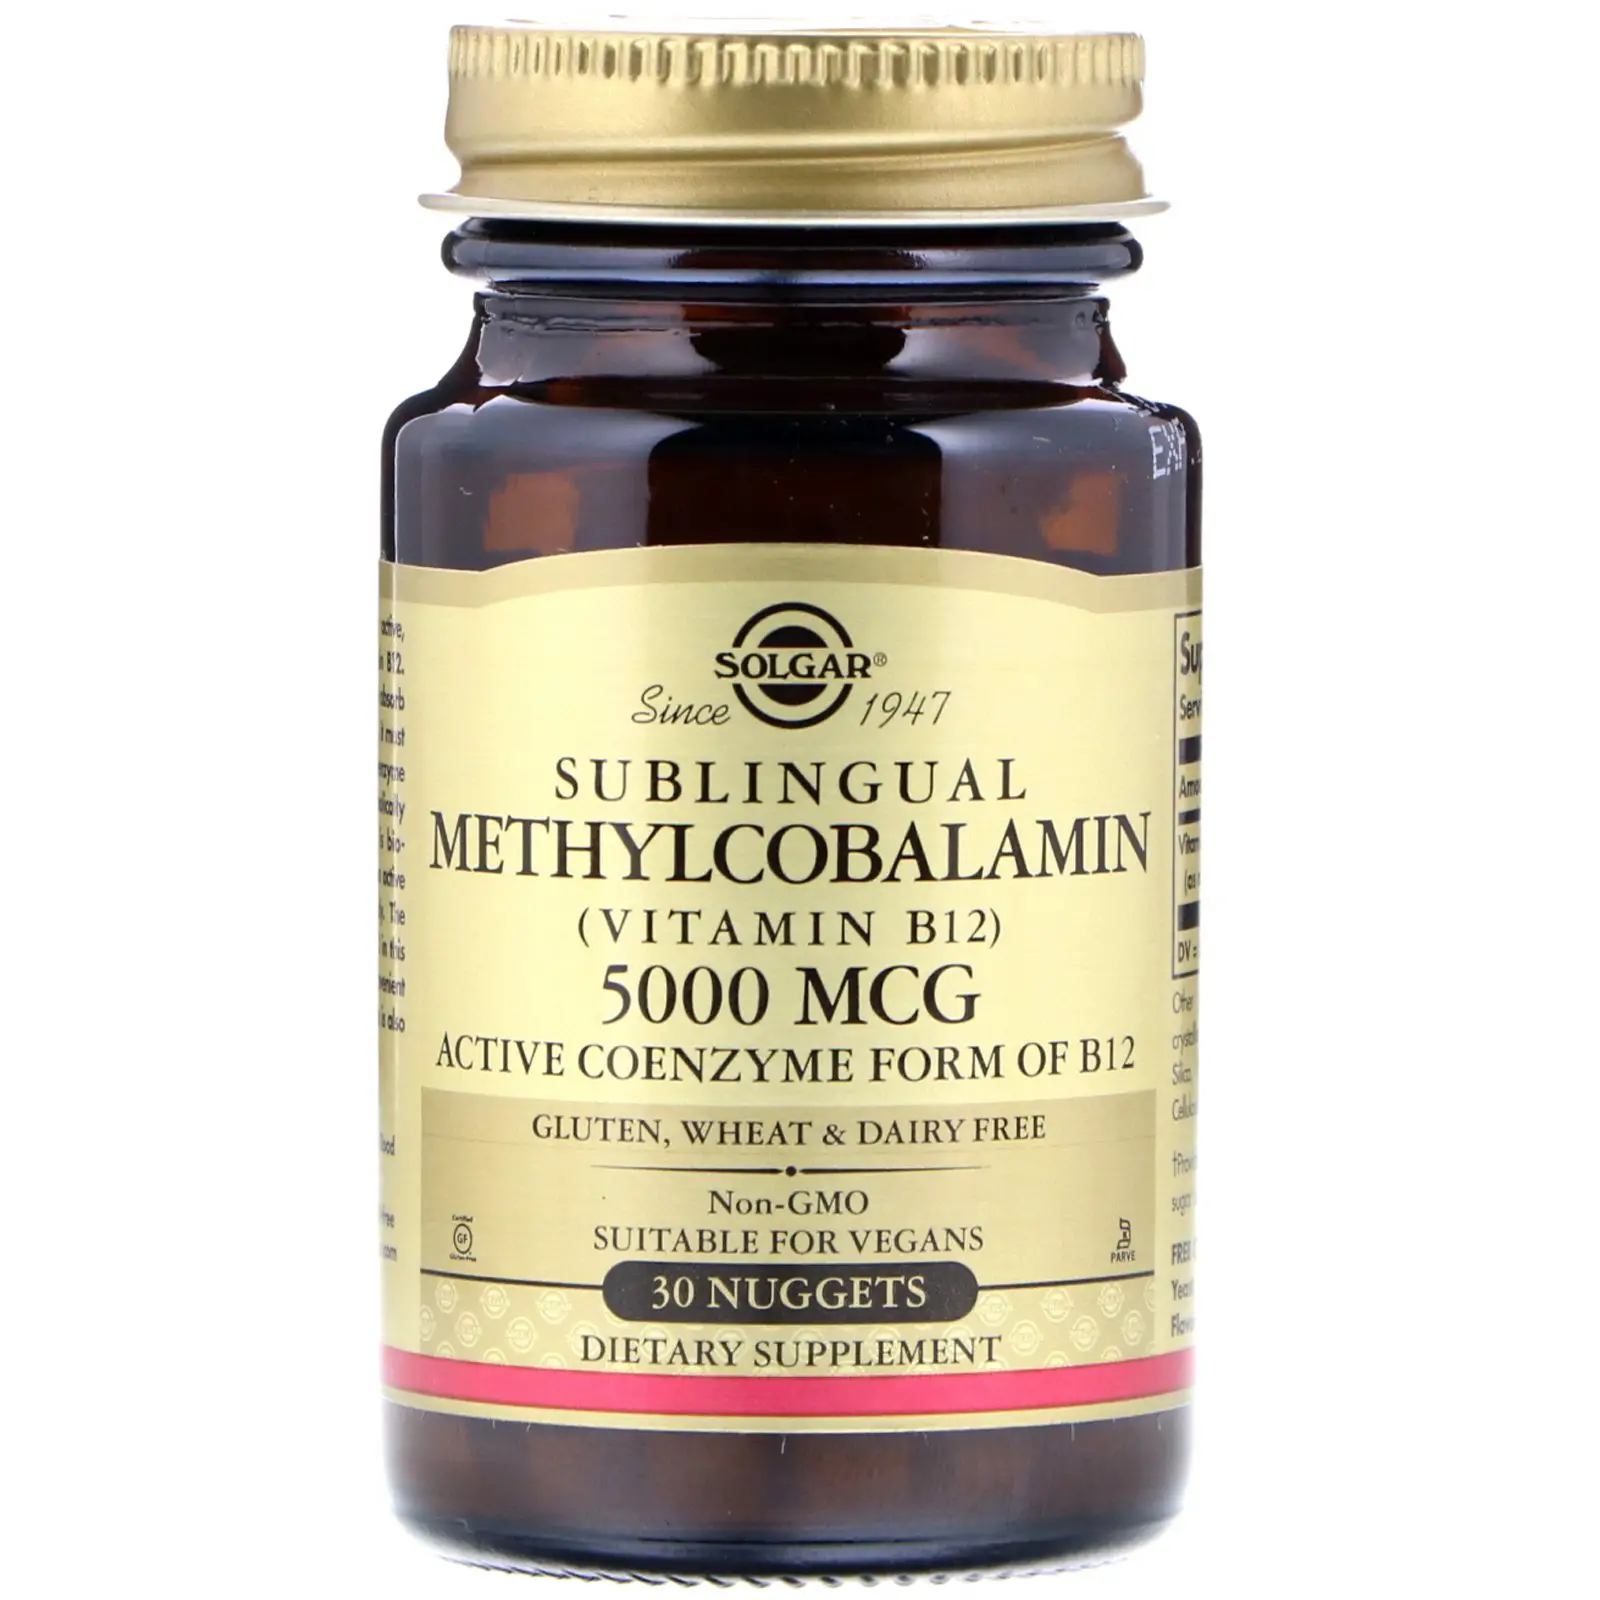 Solgar, Sublingual Methylcobalamin (Vitamin B12), 5,000 mcg, 30 Nuggets ...